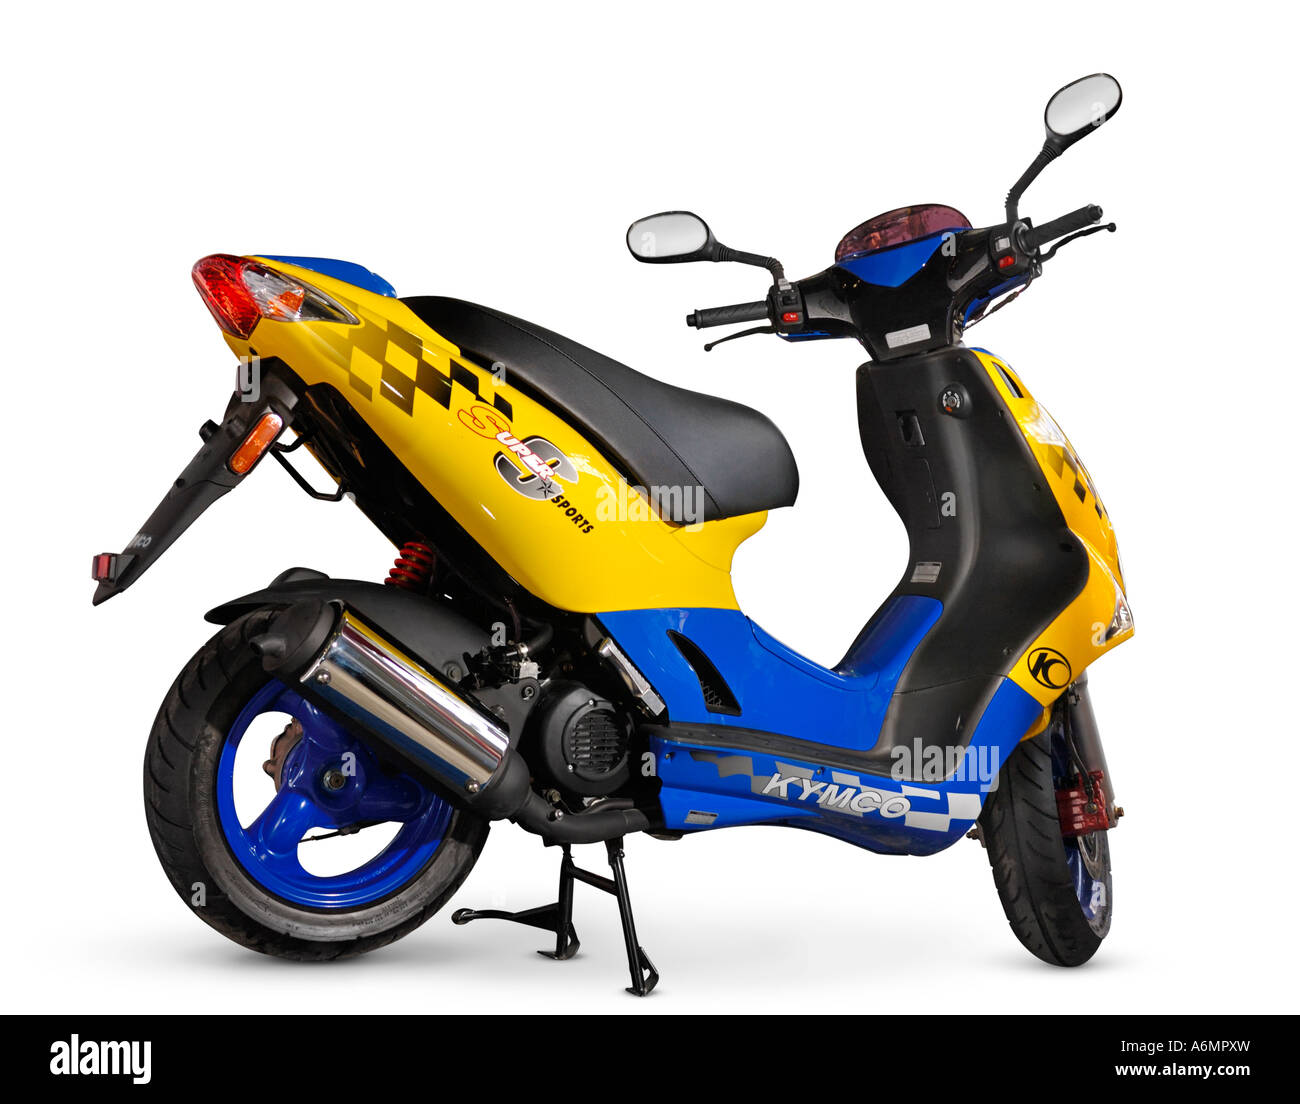 Kymco Super 9s motor scooter Fotografía de stock - Alamy